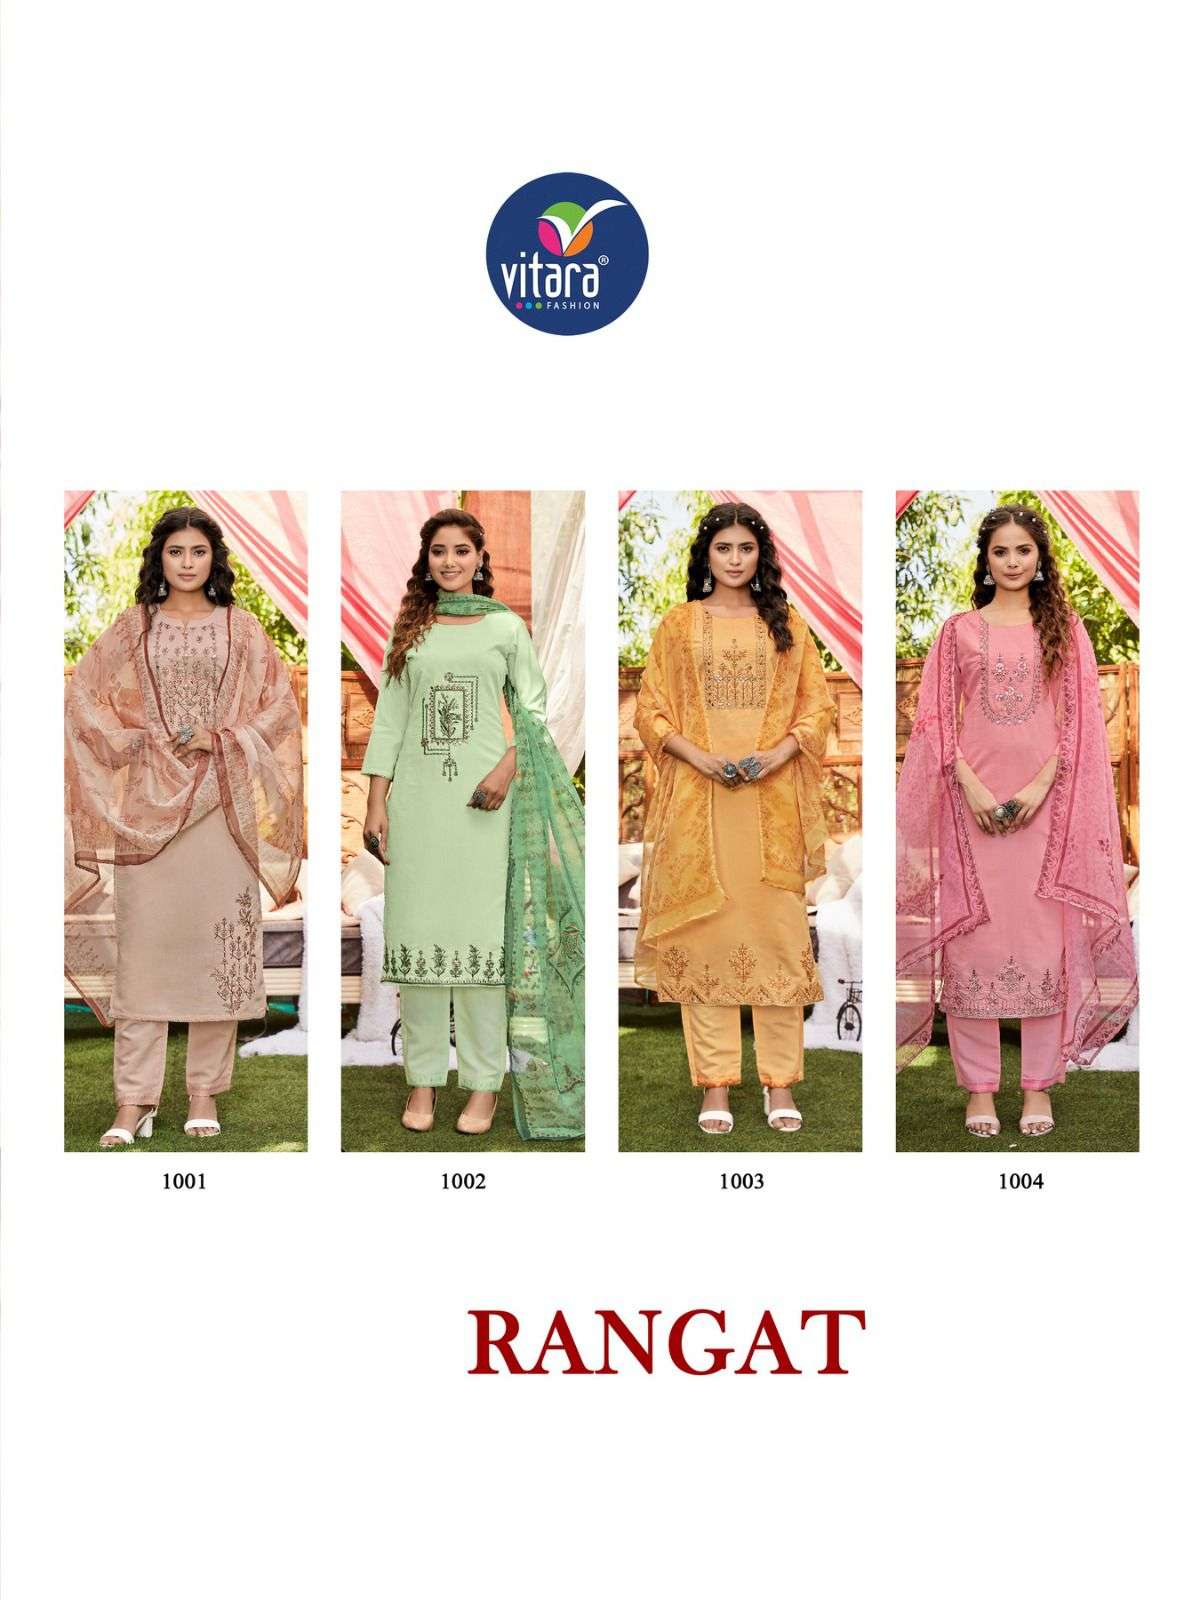 Vitara Rangat collection 1